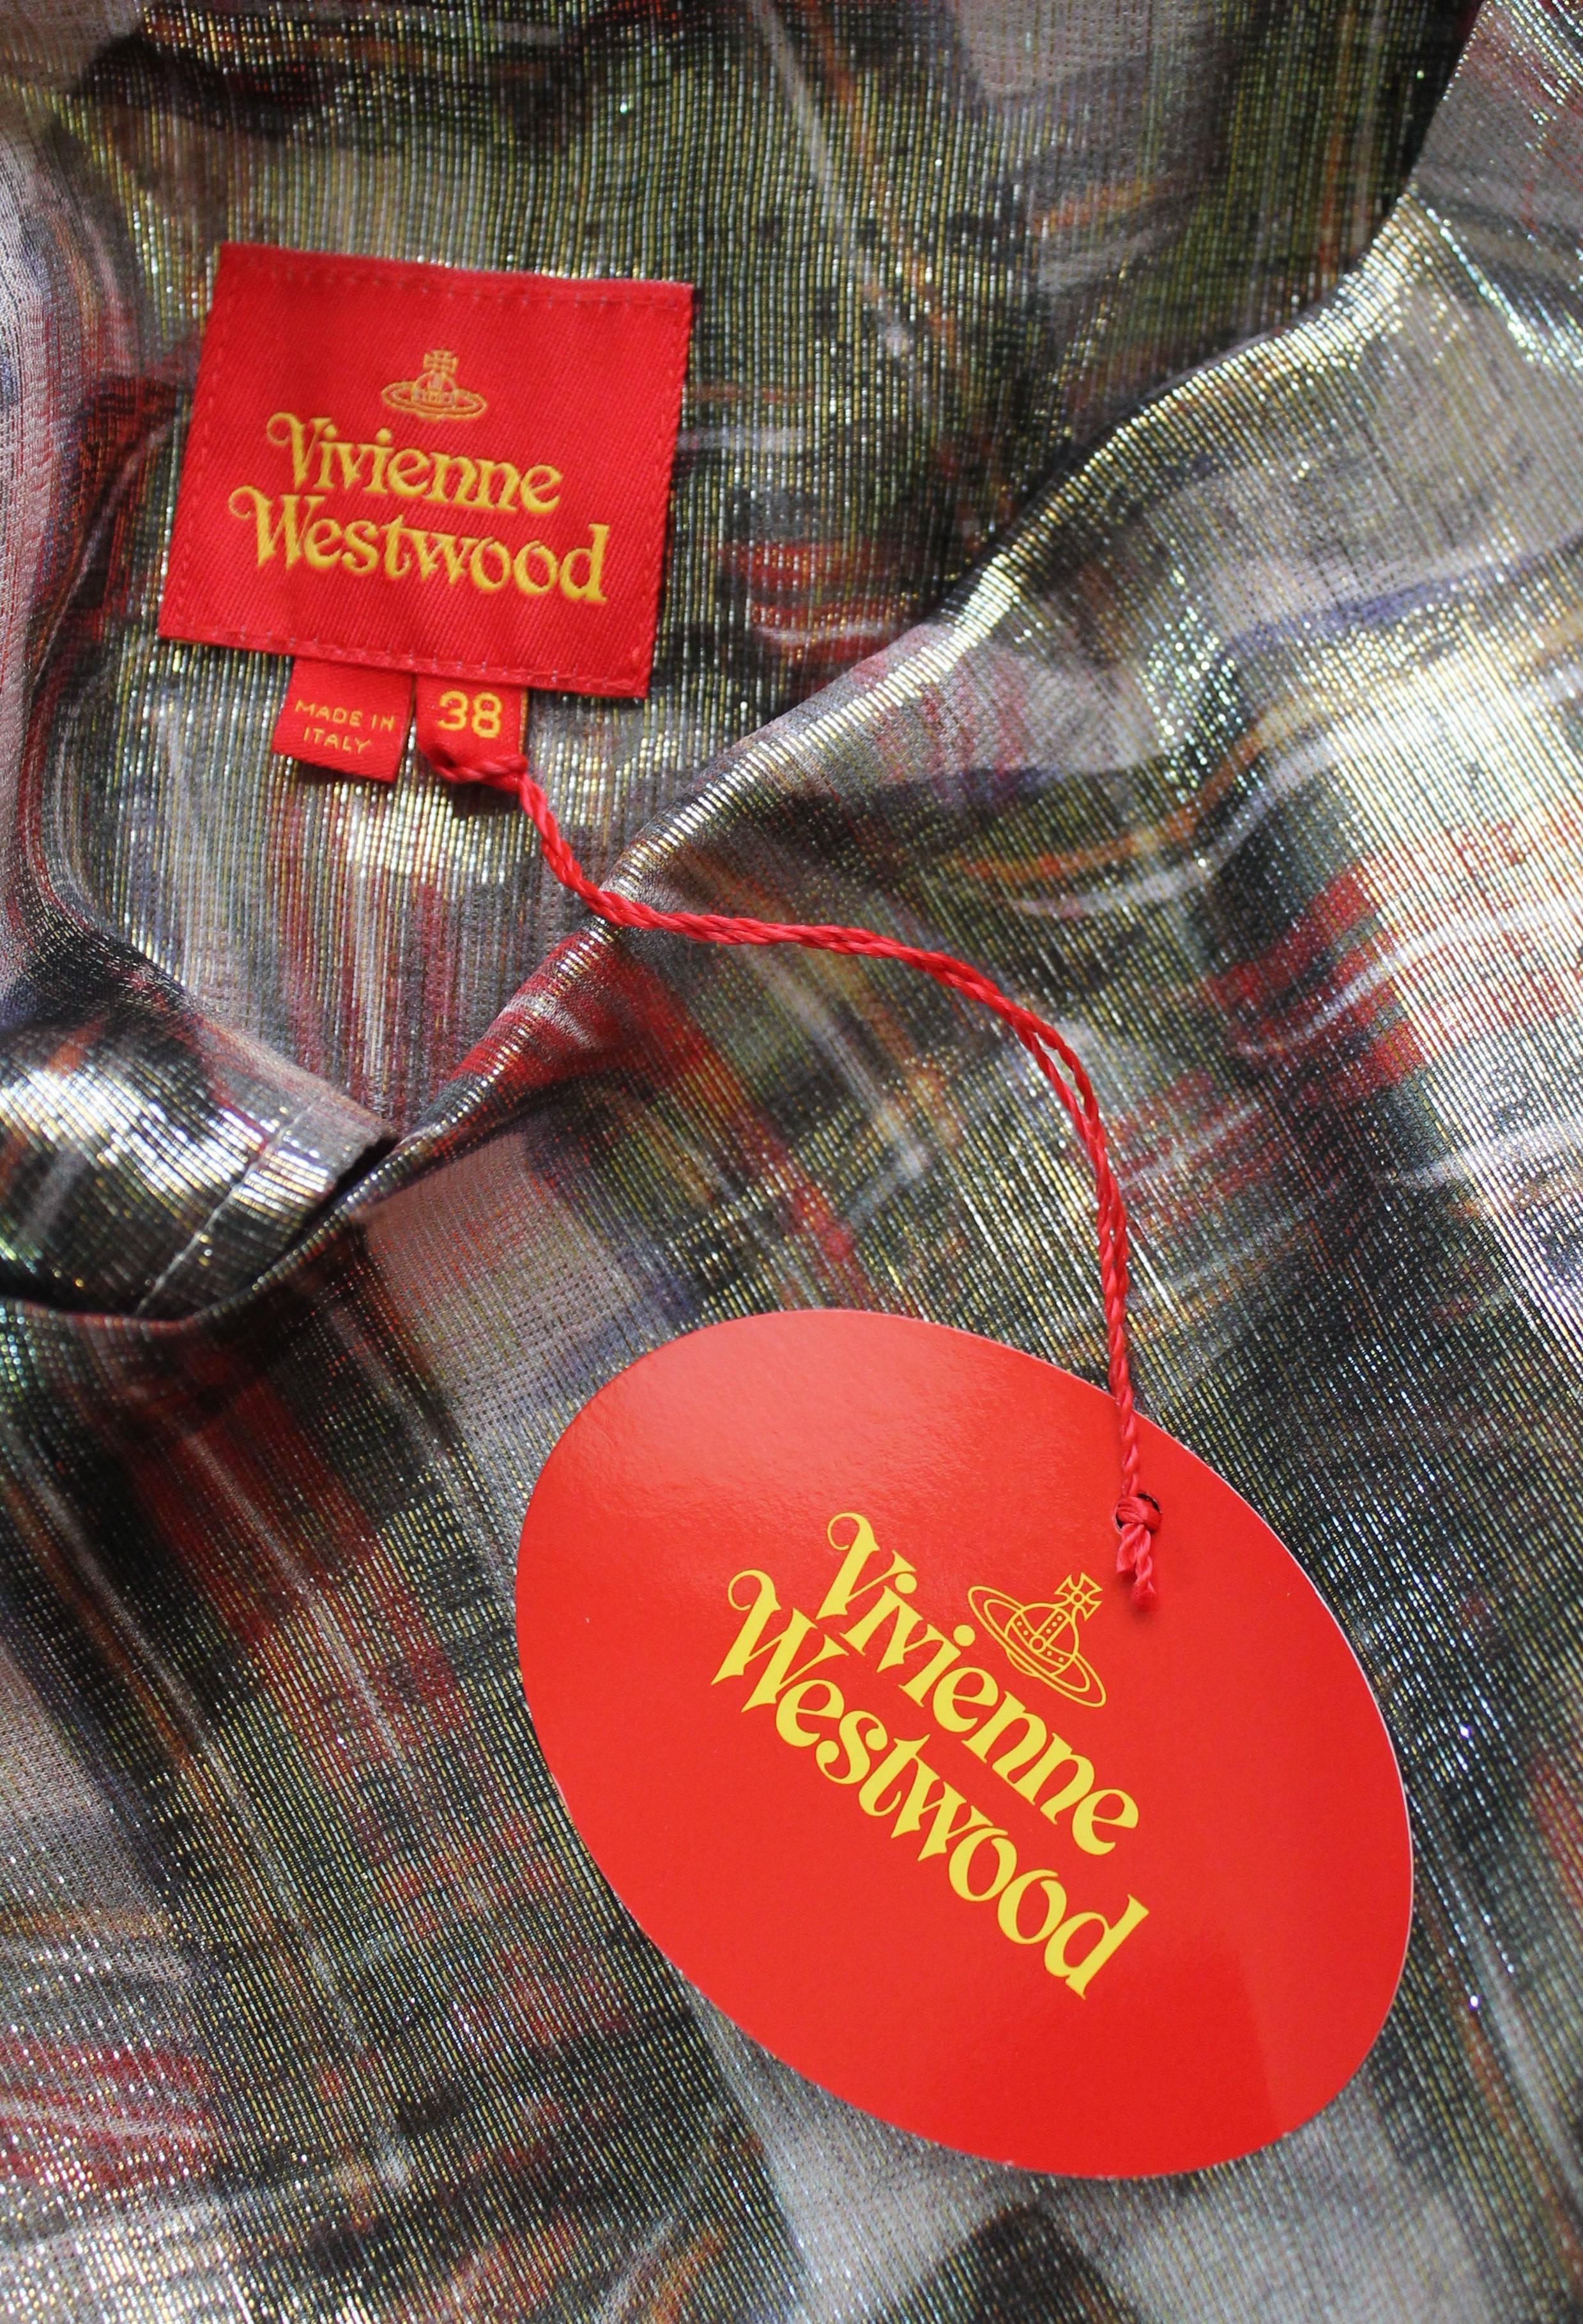 Vivienne Westwood Red Label 